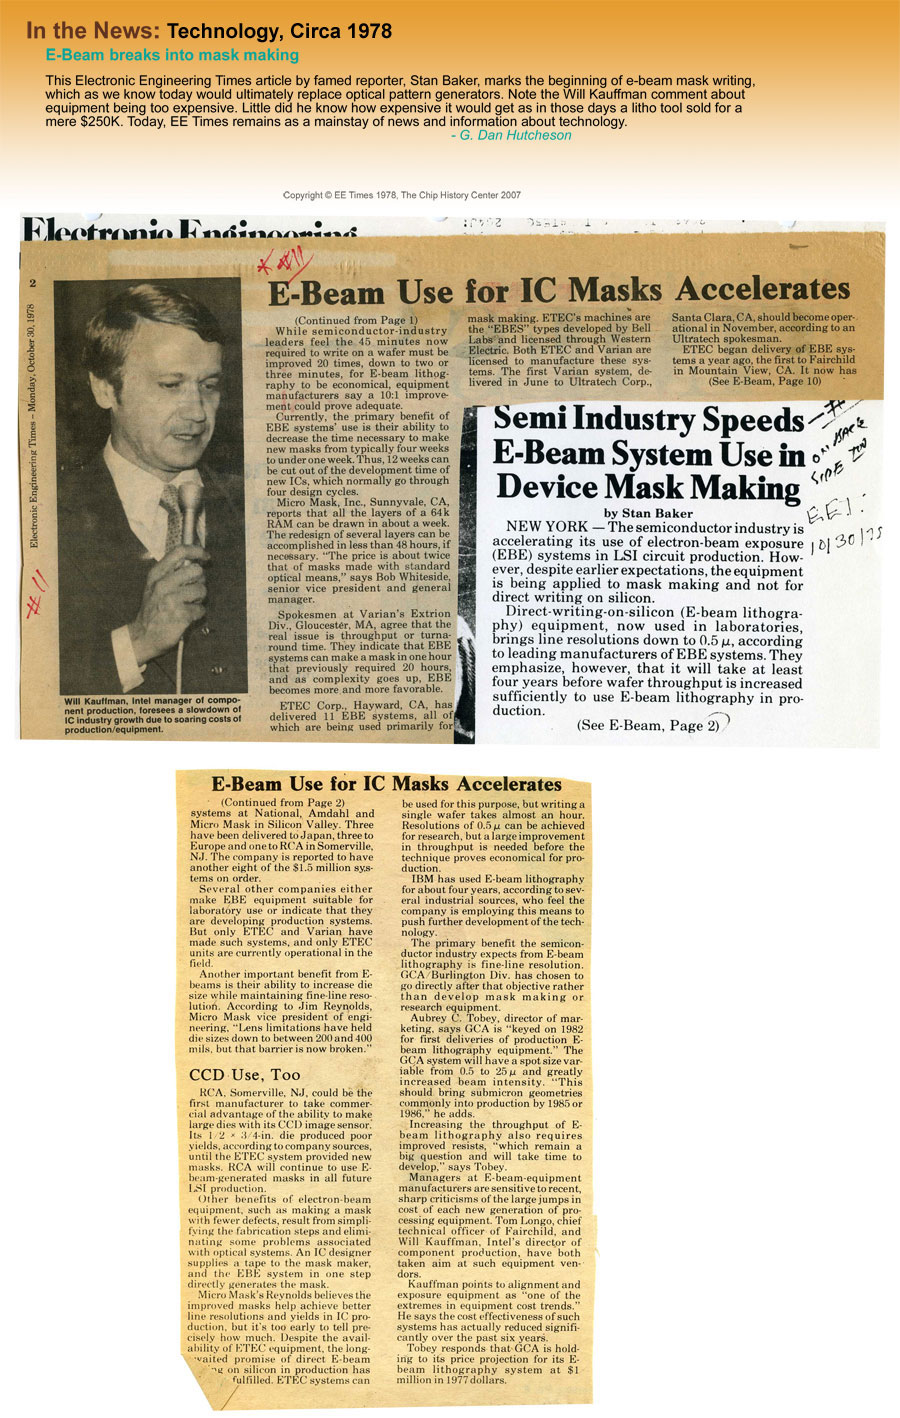 Technology, Circa 1978 - E-Beam breaks into mask making